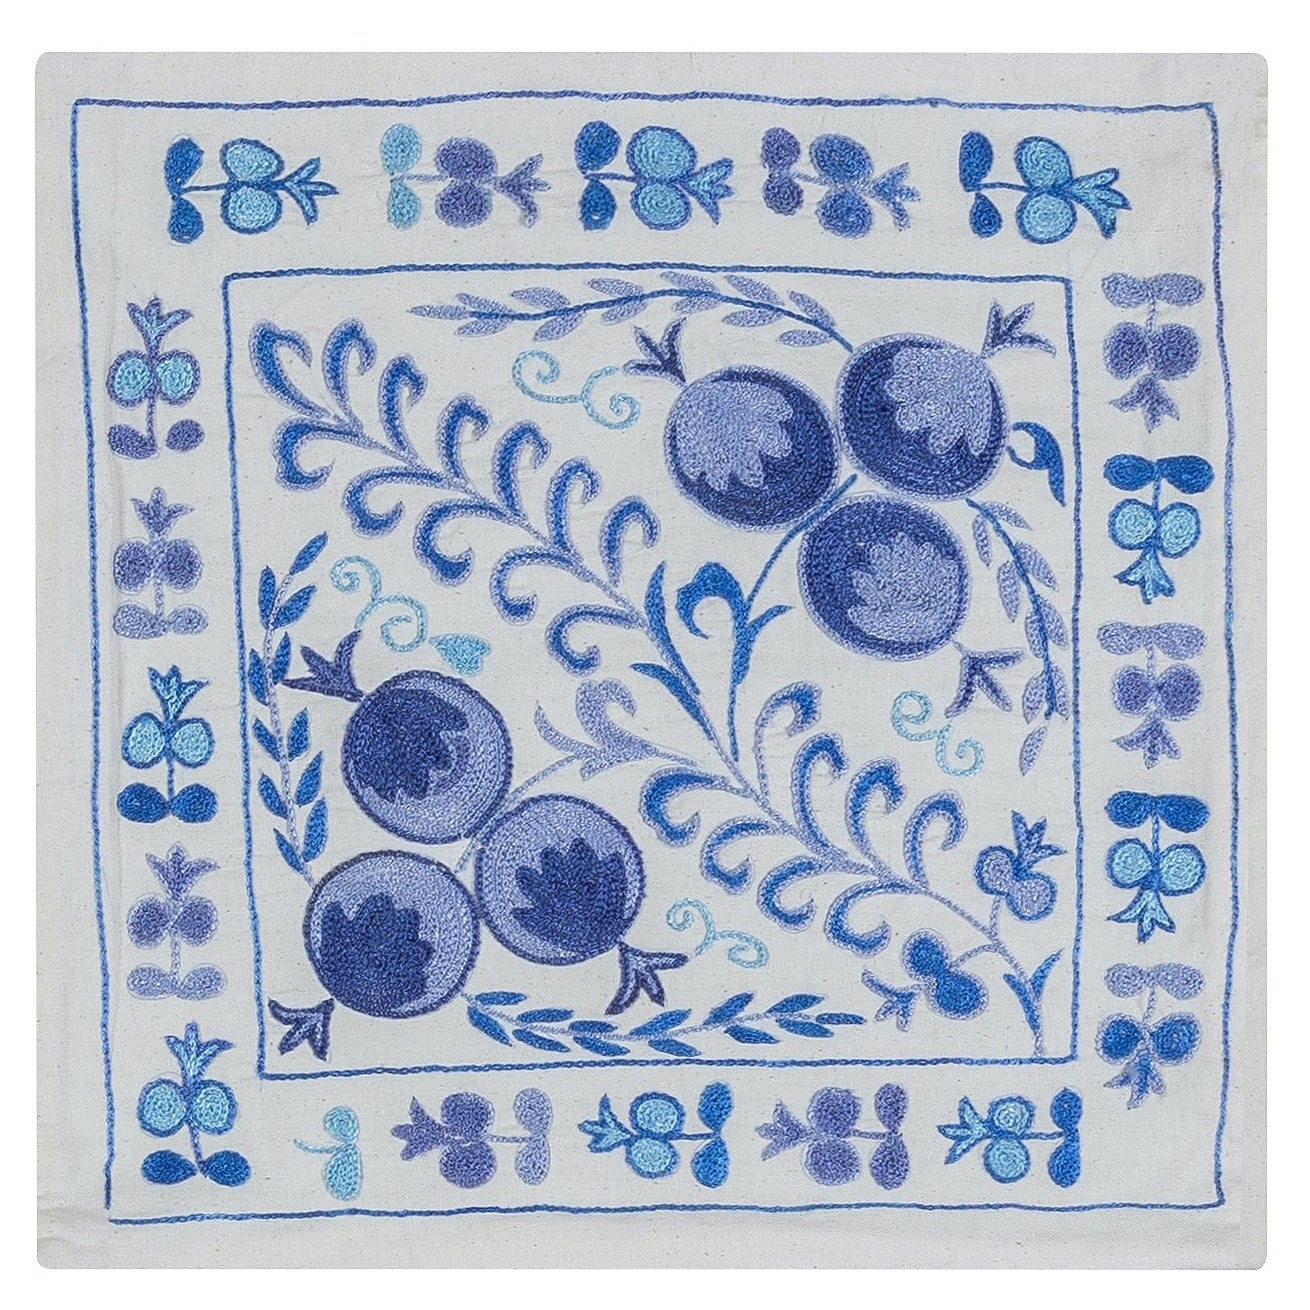 Suzani Textile Embroidered Silk Cushion Cover, Made in Uzbekistan